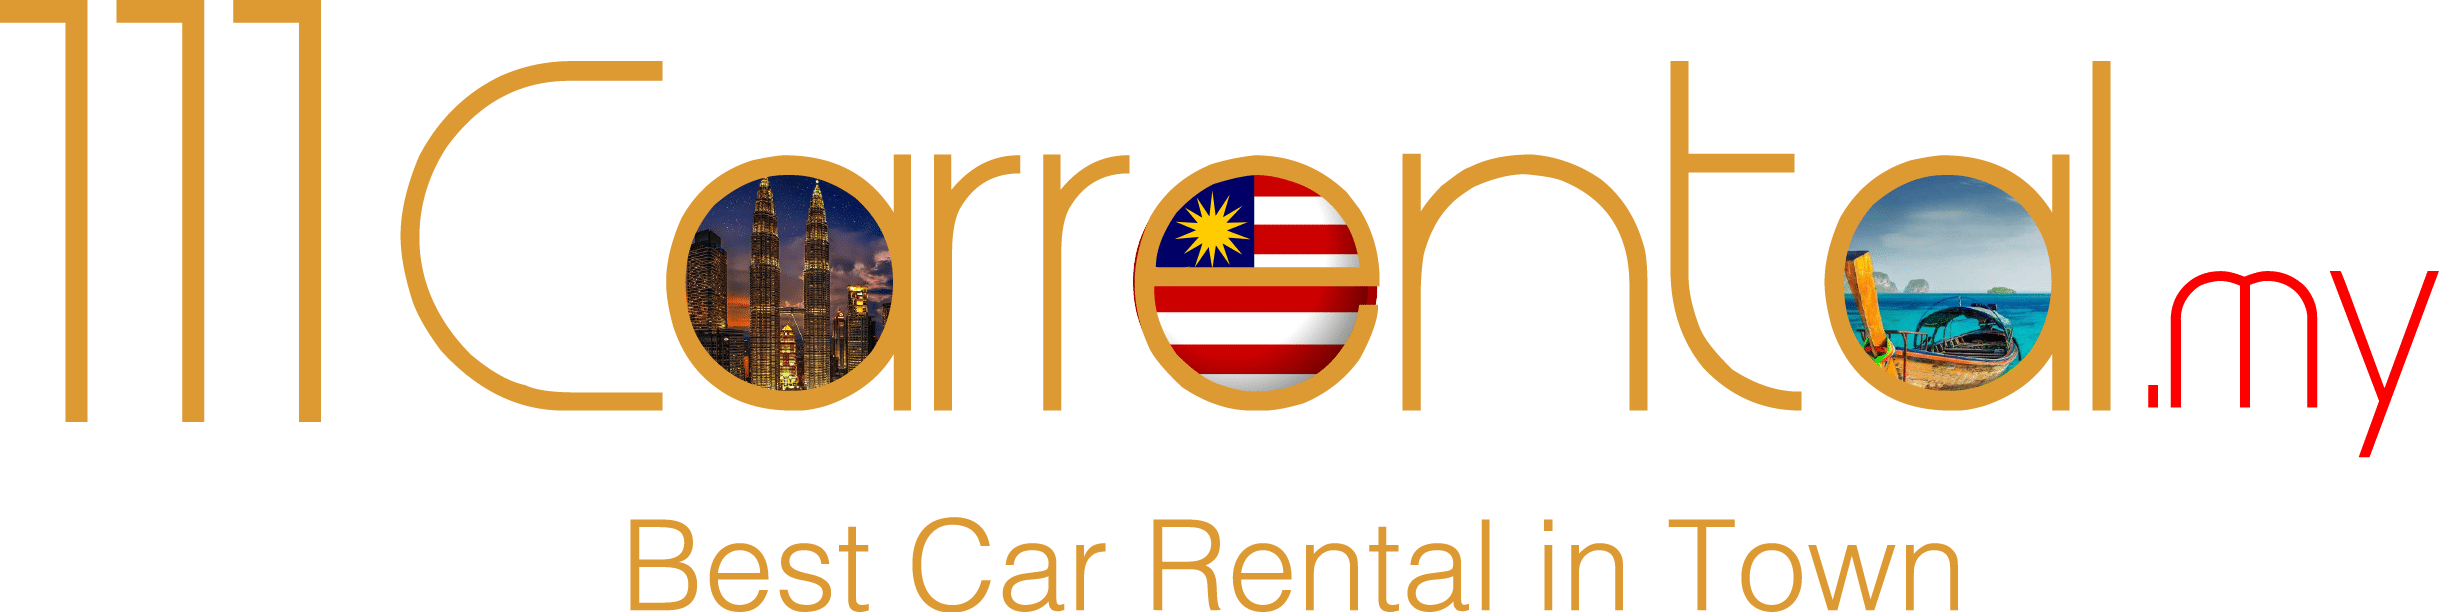 111 Car Rental | Uncategorized - 111 Car Rental